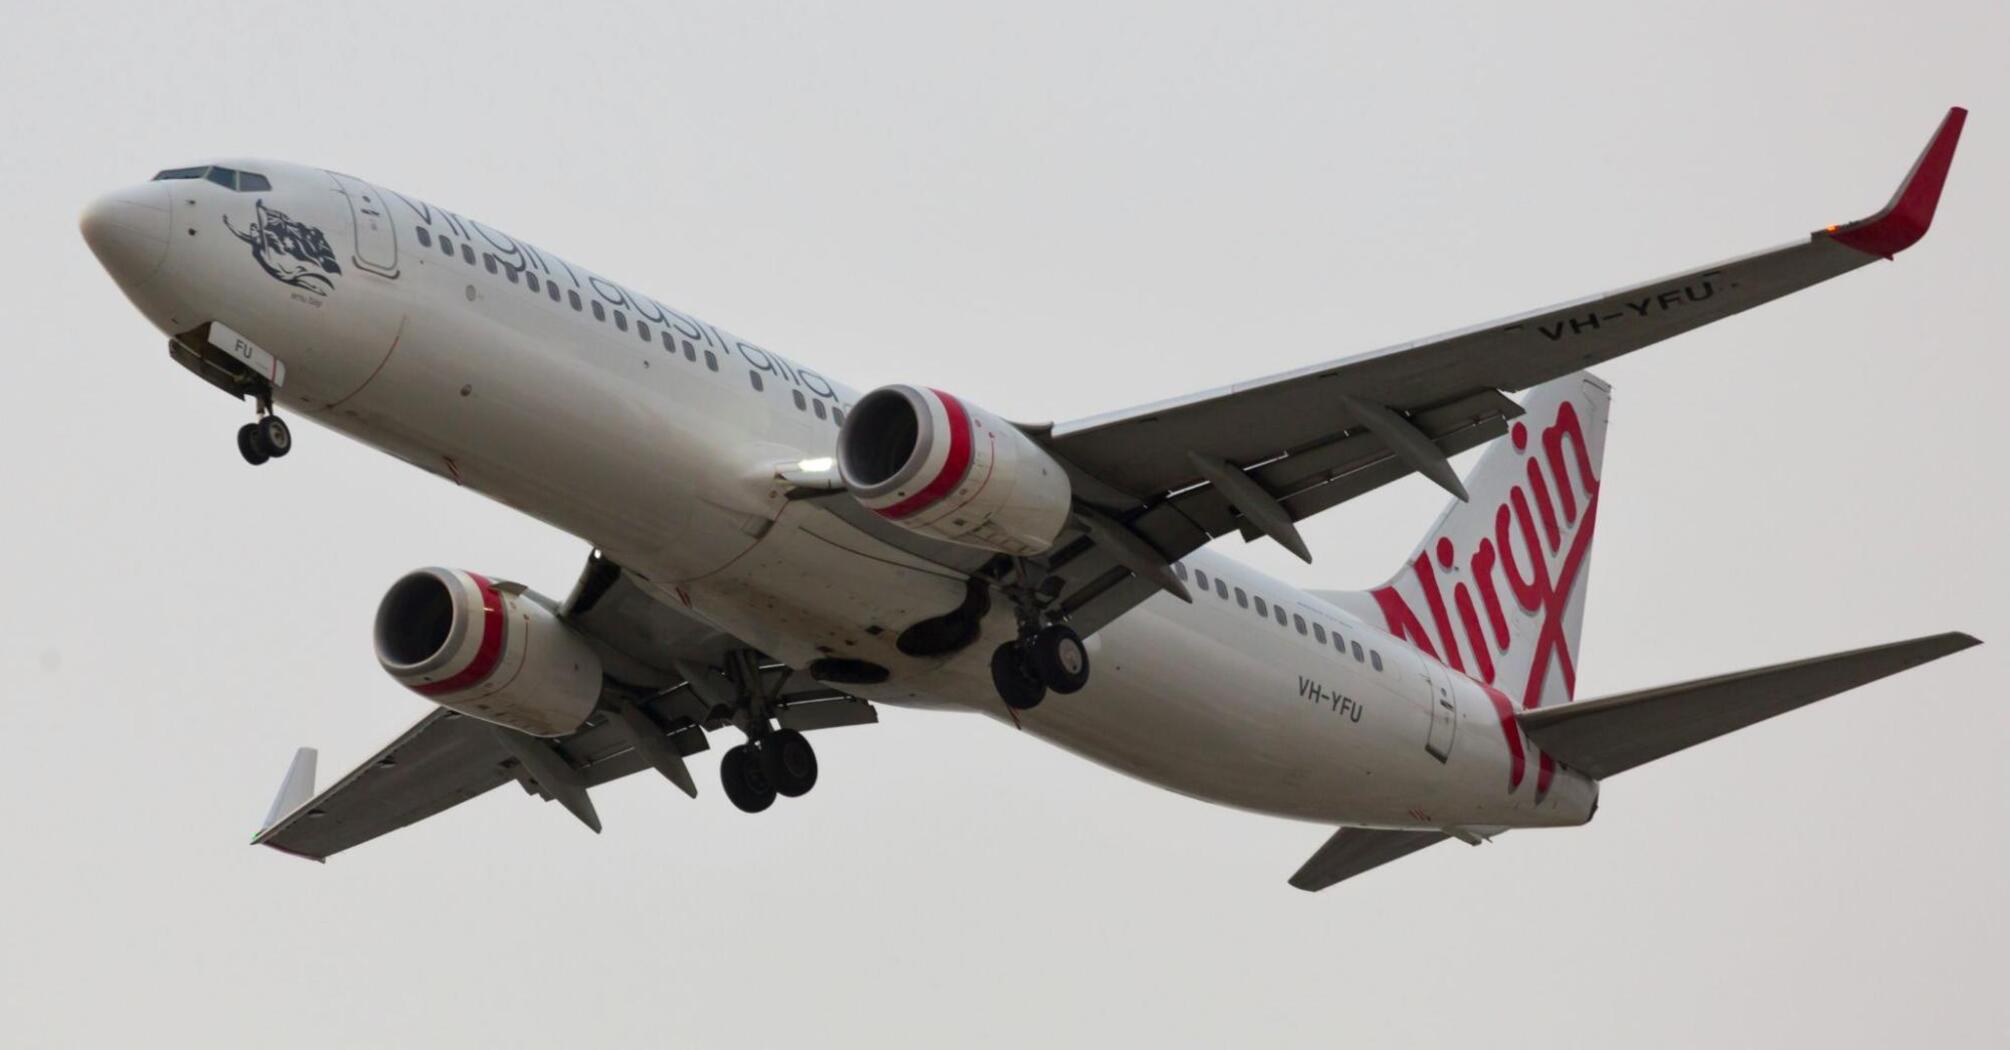 Virgin Australia aircraft landing at Sydney Airport